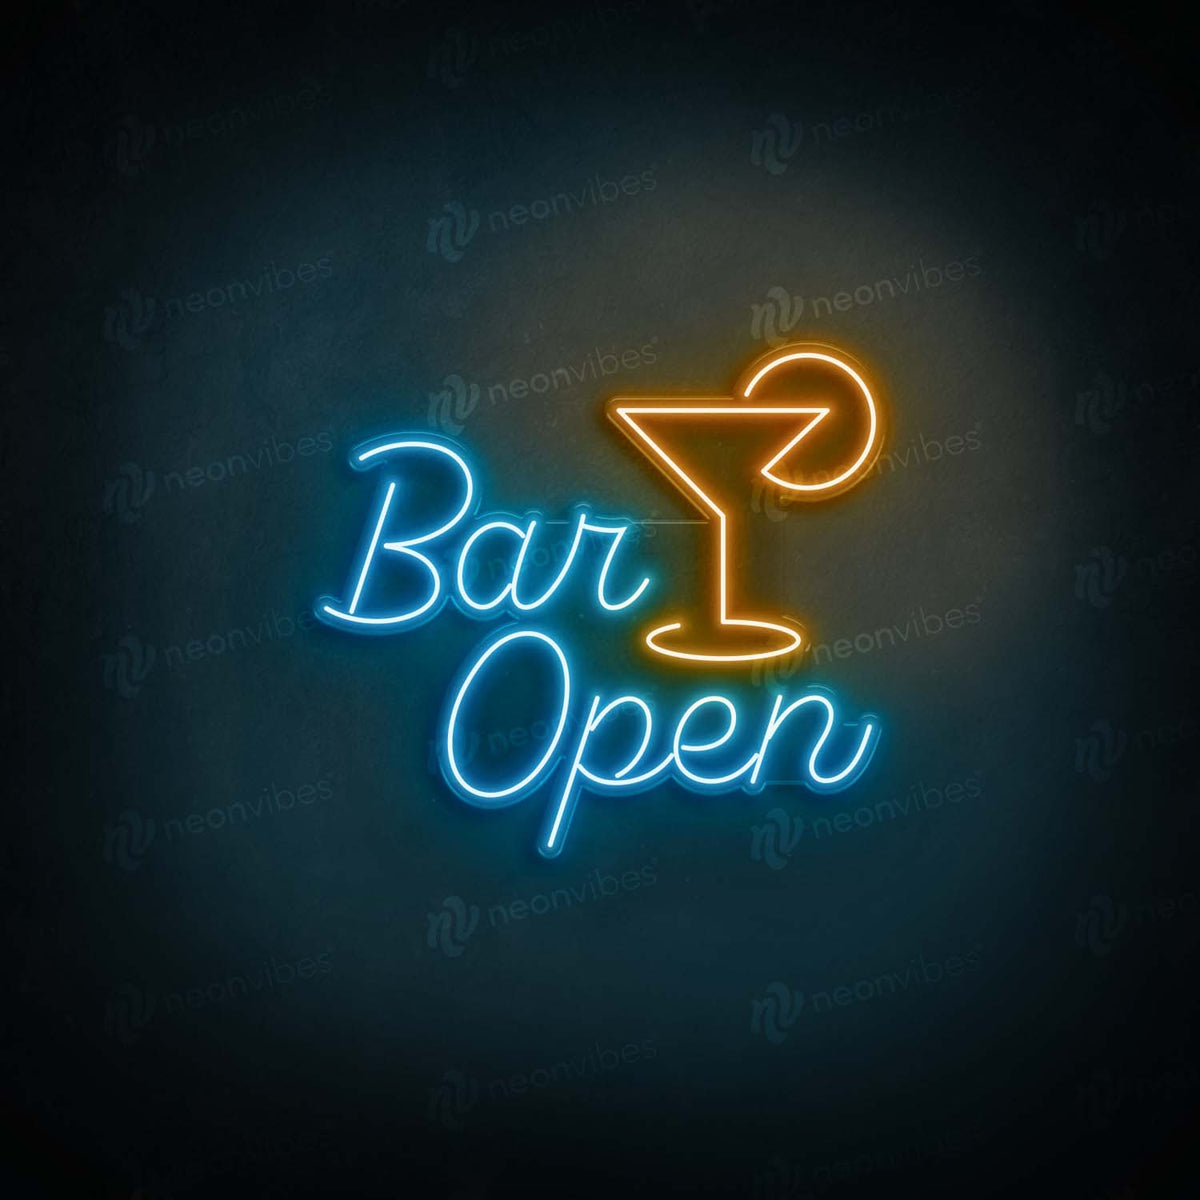 Bar open neon sign